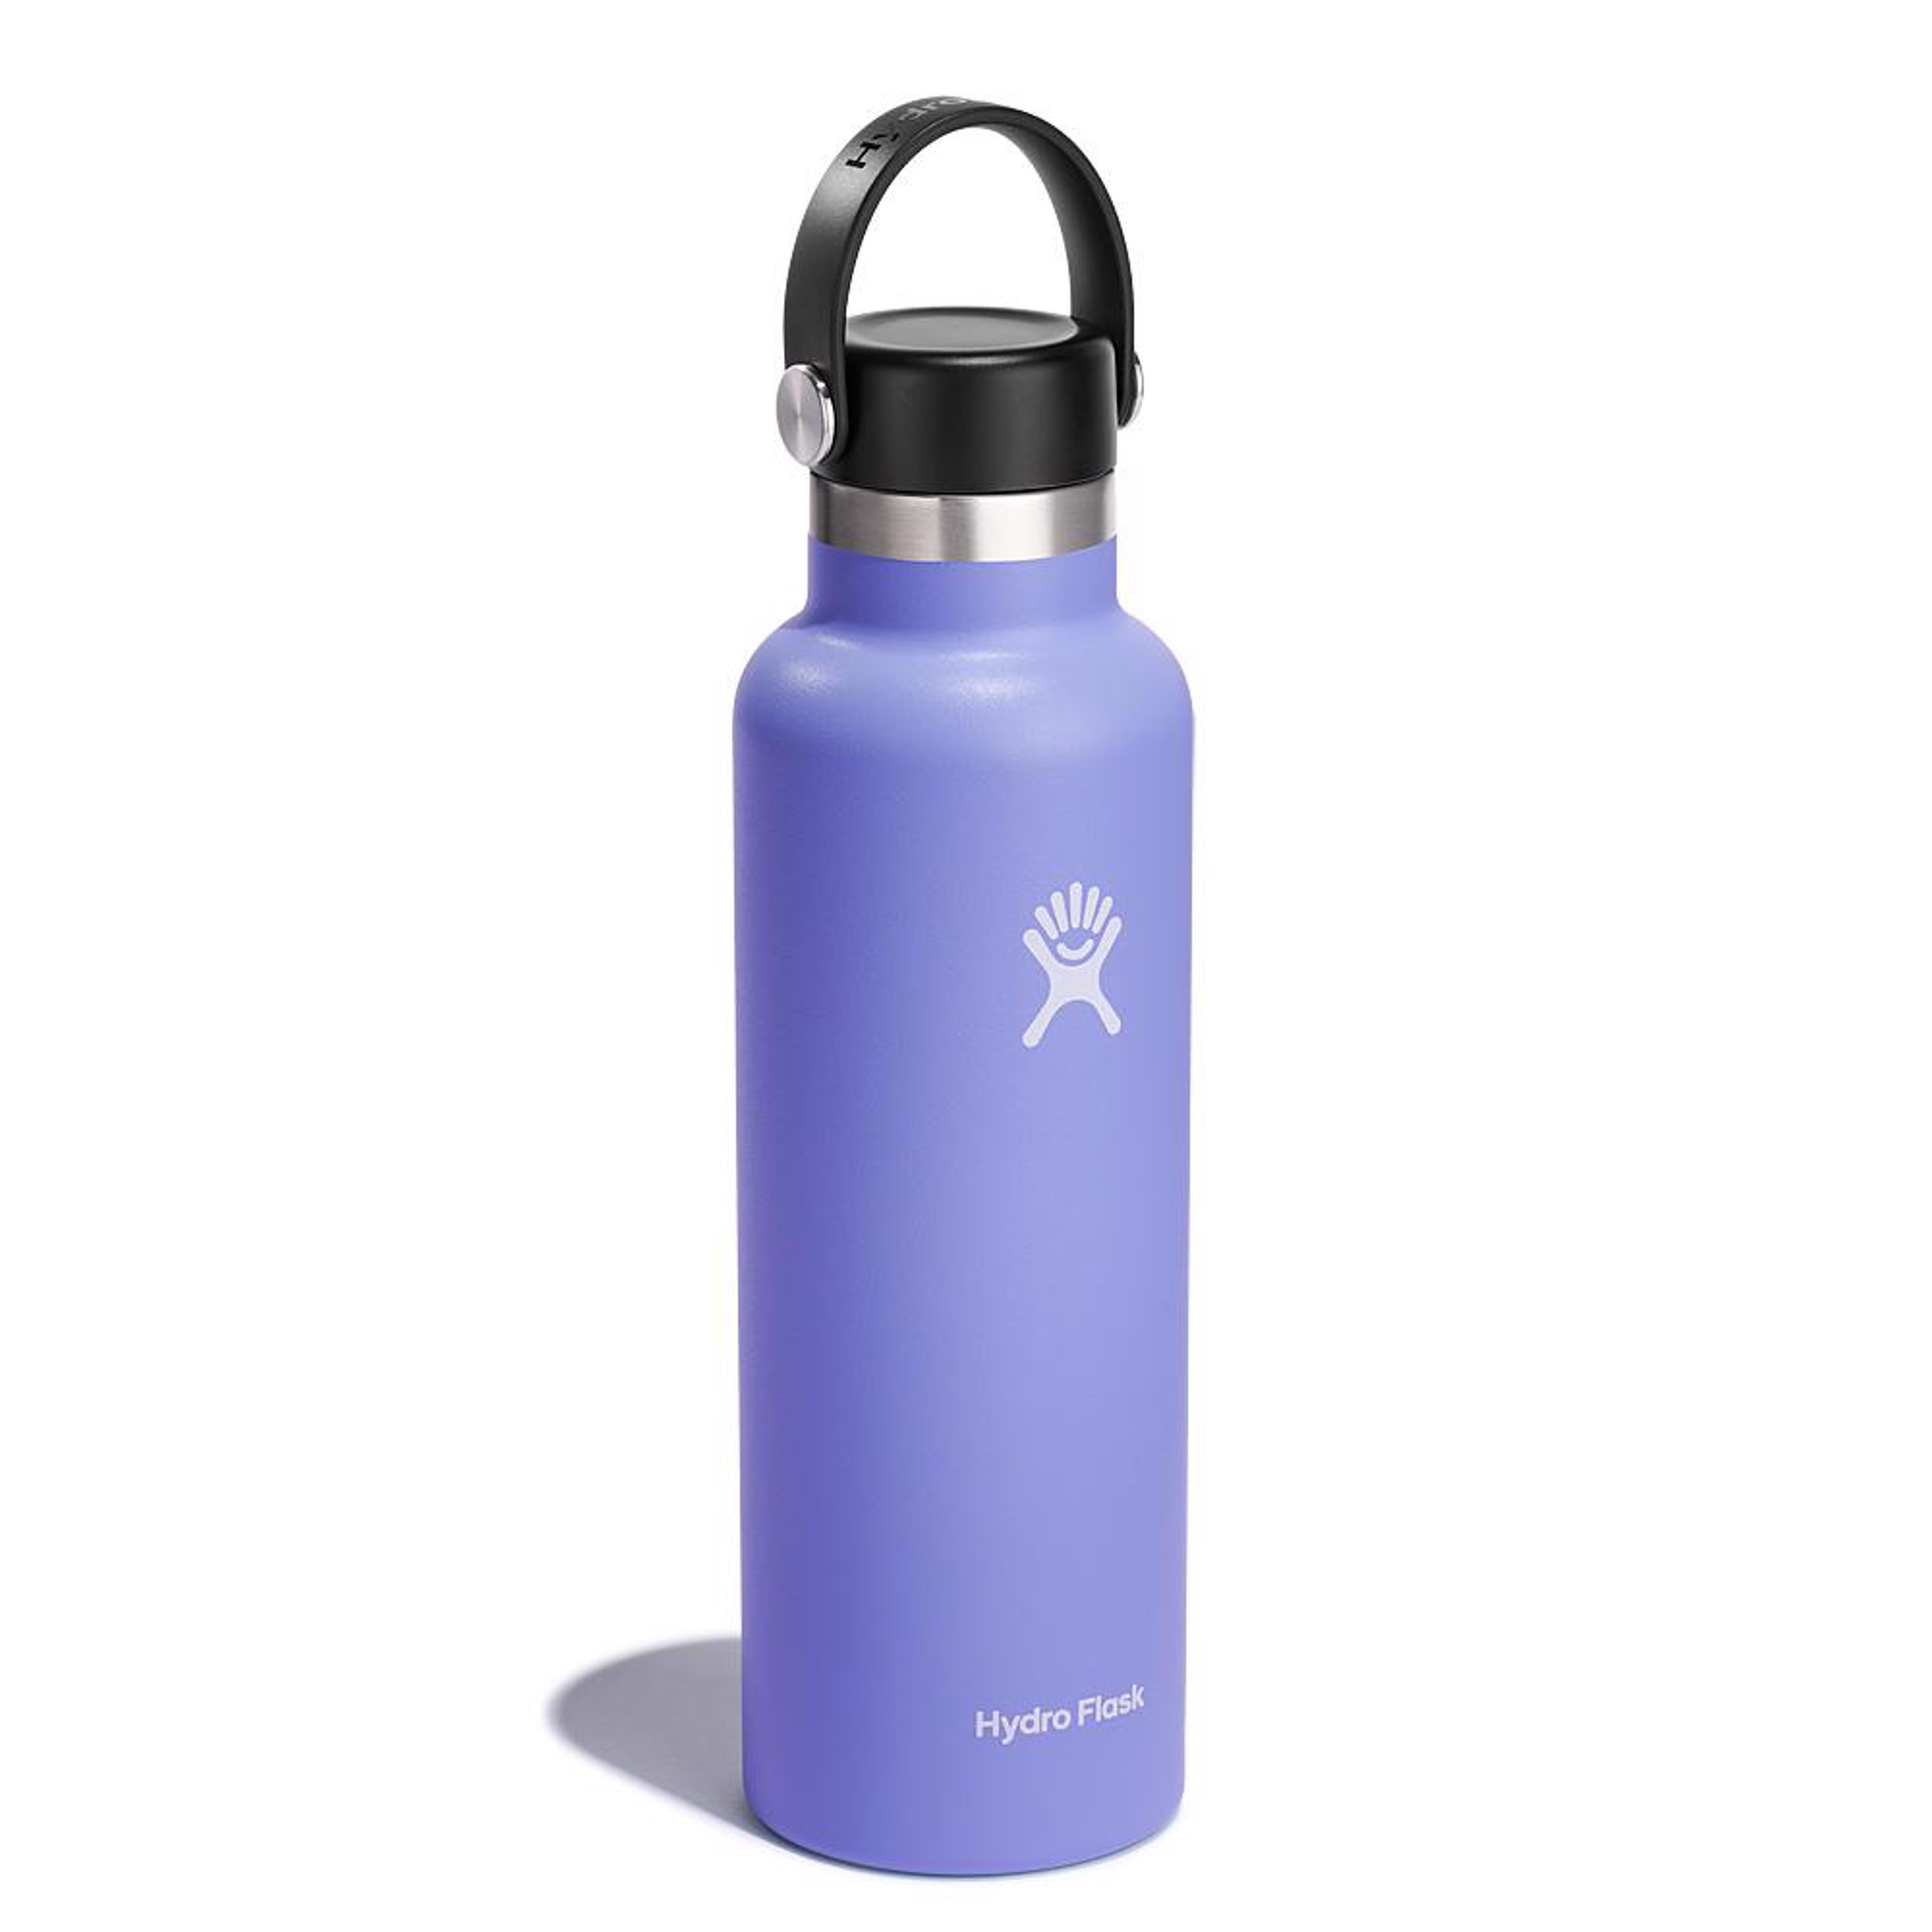 Hydro Flask Standard Mouth Lid  Hydroflask, Hydro flask bottle, Flask